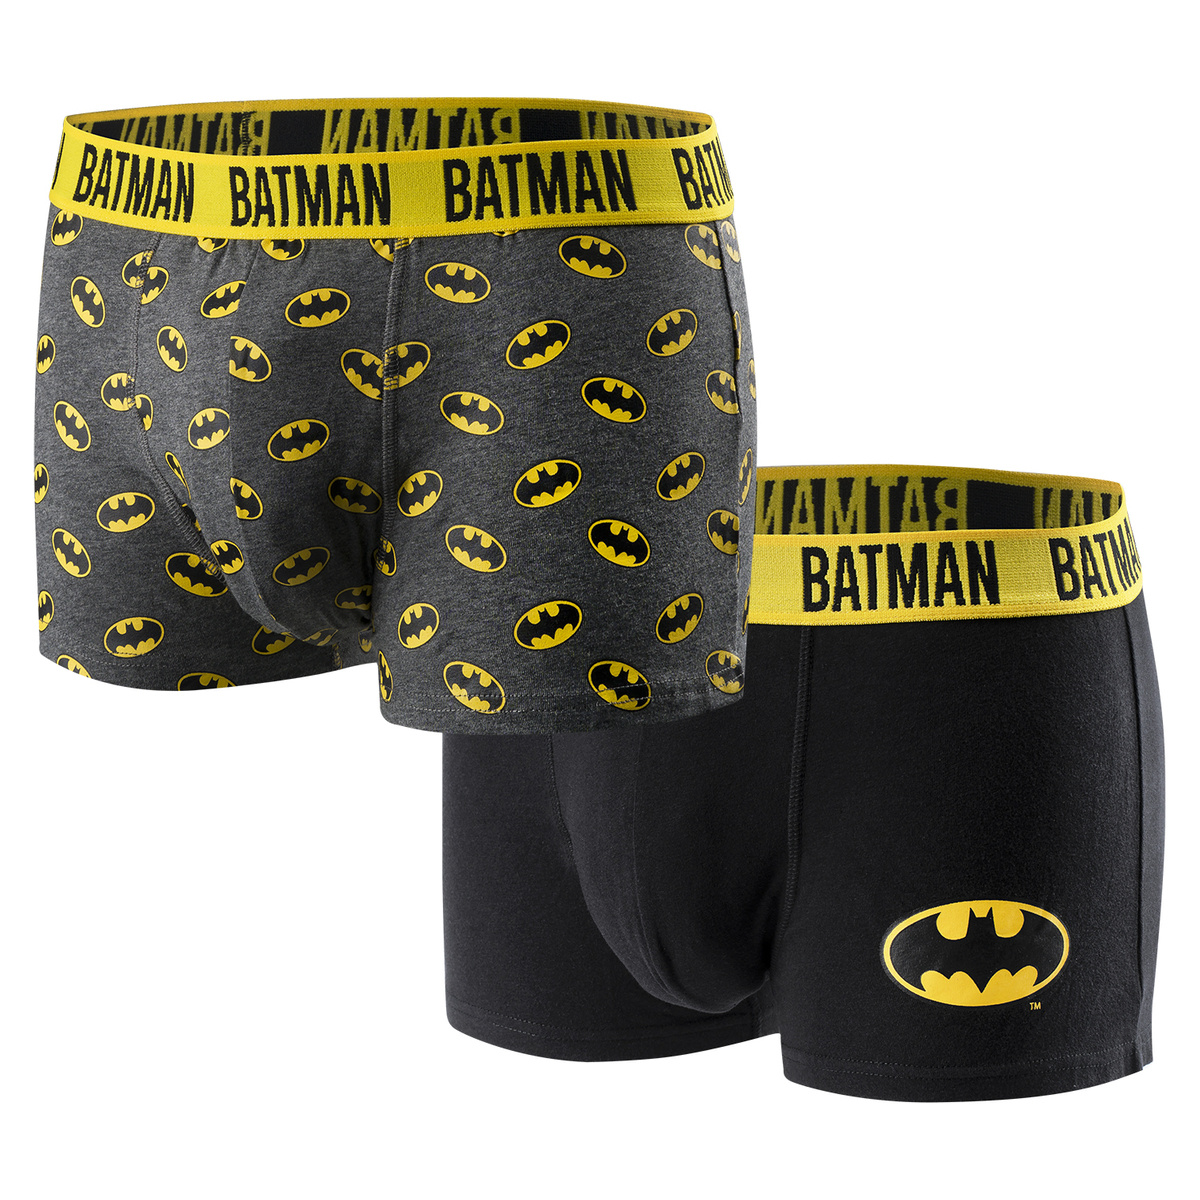 Set of 2x Batman boxer shorts, Gift idea, Boy's Day